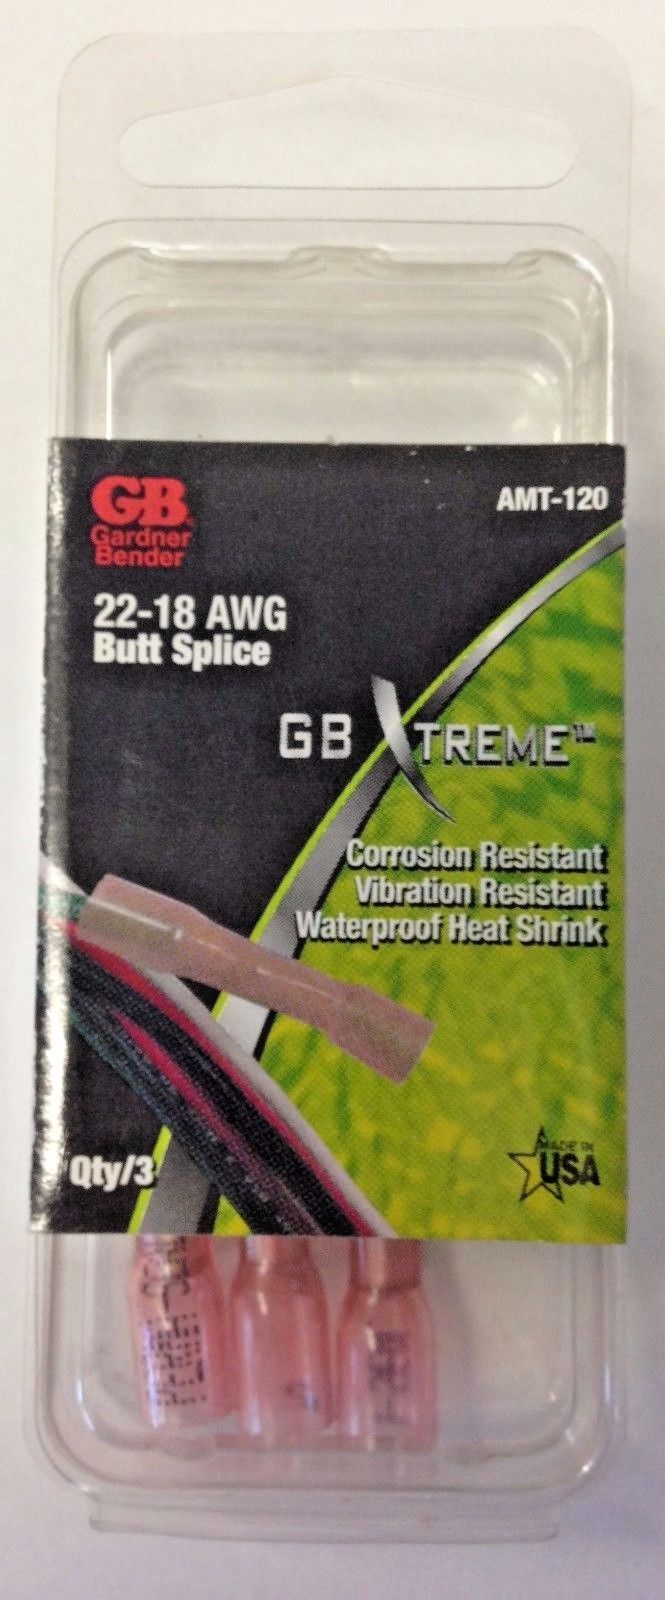 Gardner Bender AMT-120 Xtreme Butt Splice Terminals 22-18 AWG 3 Pack USA